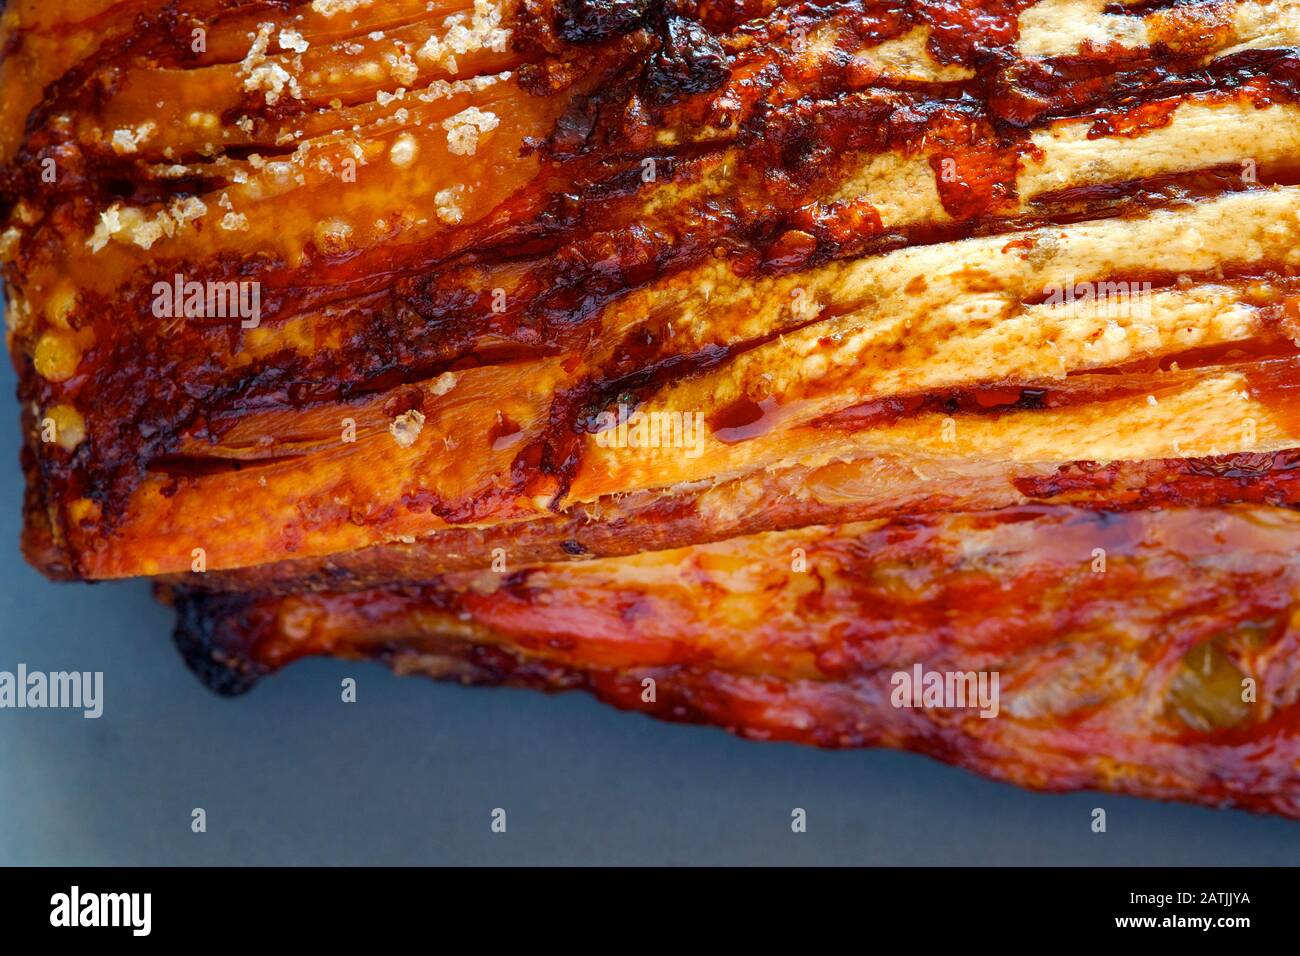 Roast Pork with Crackling Skin Stock Photo